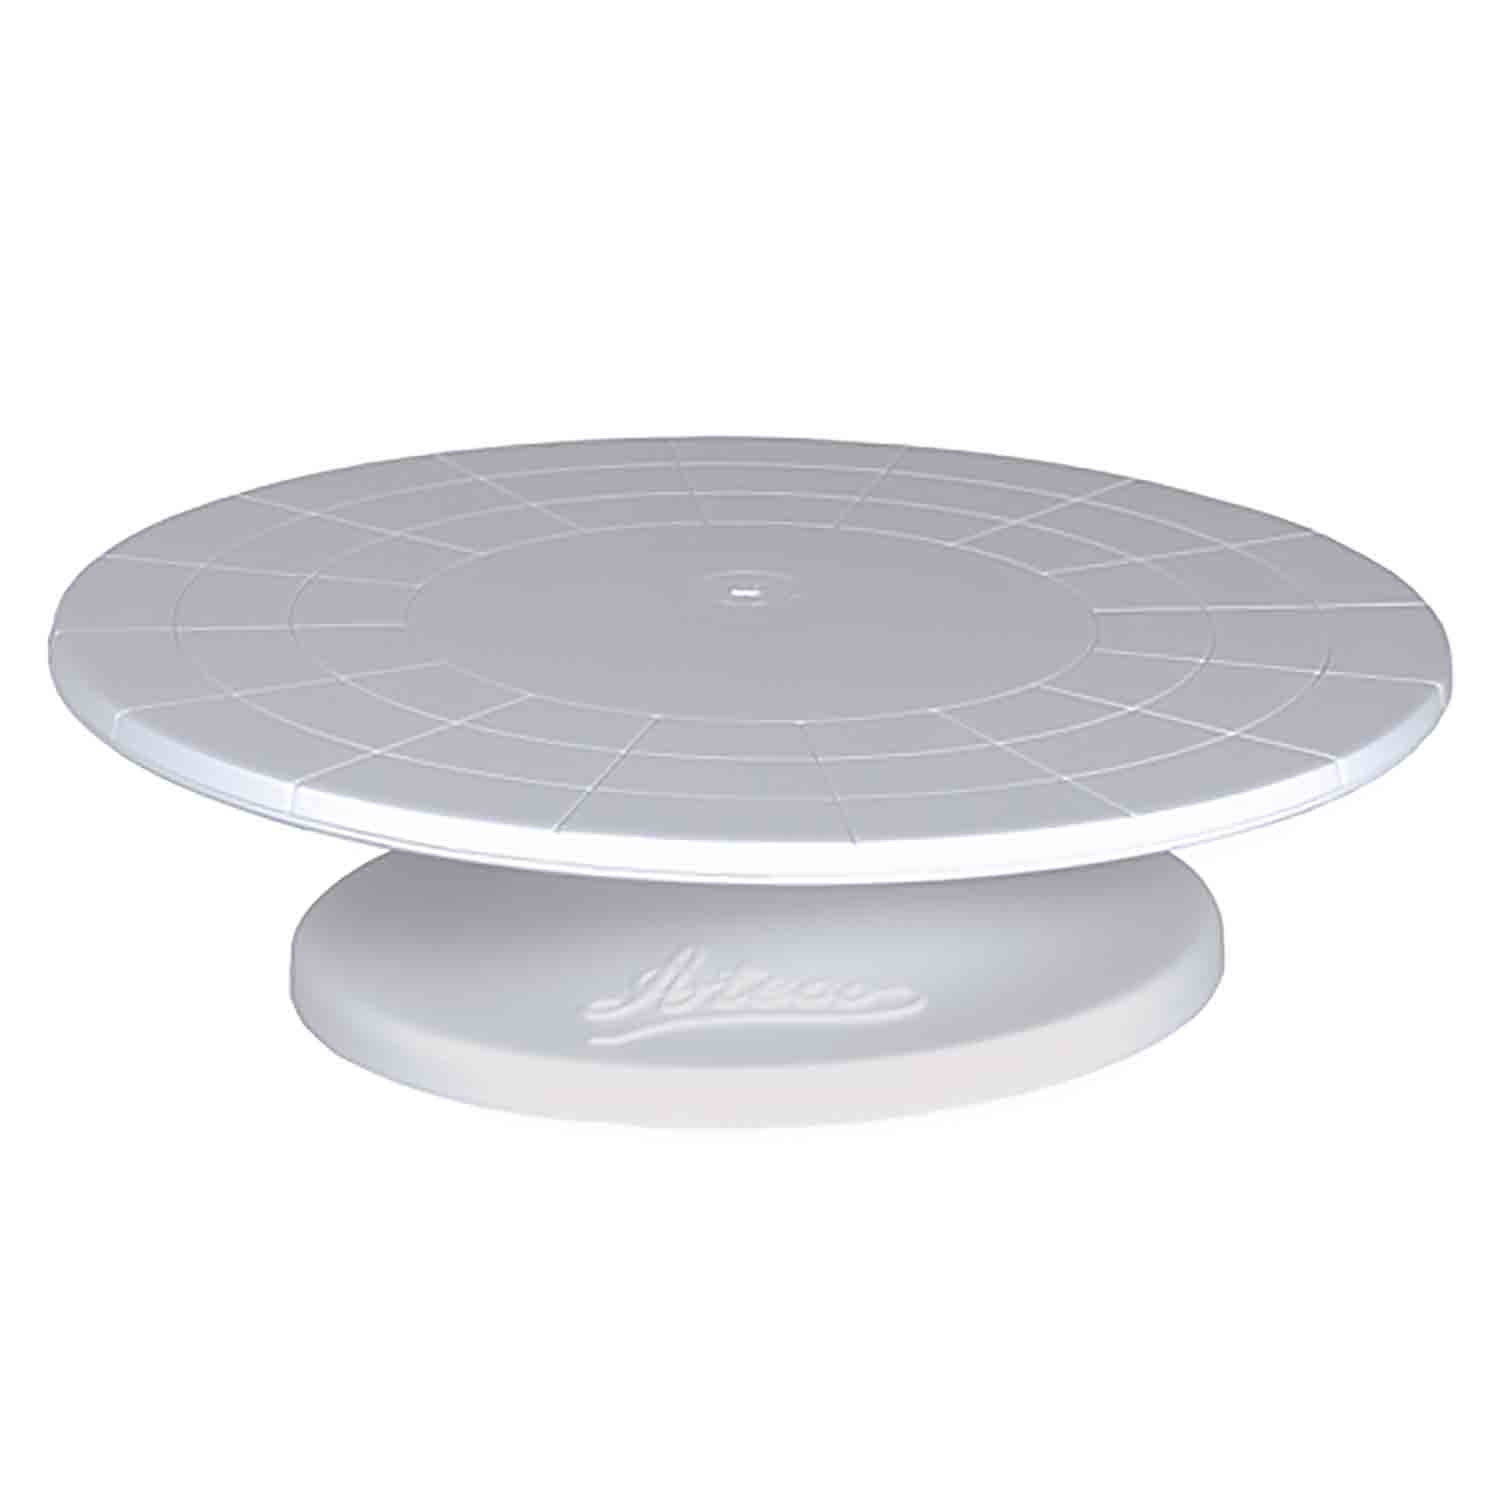 Ateco 610 12 Revolving Plastic Cake Turntable / Stand